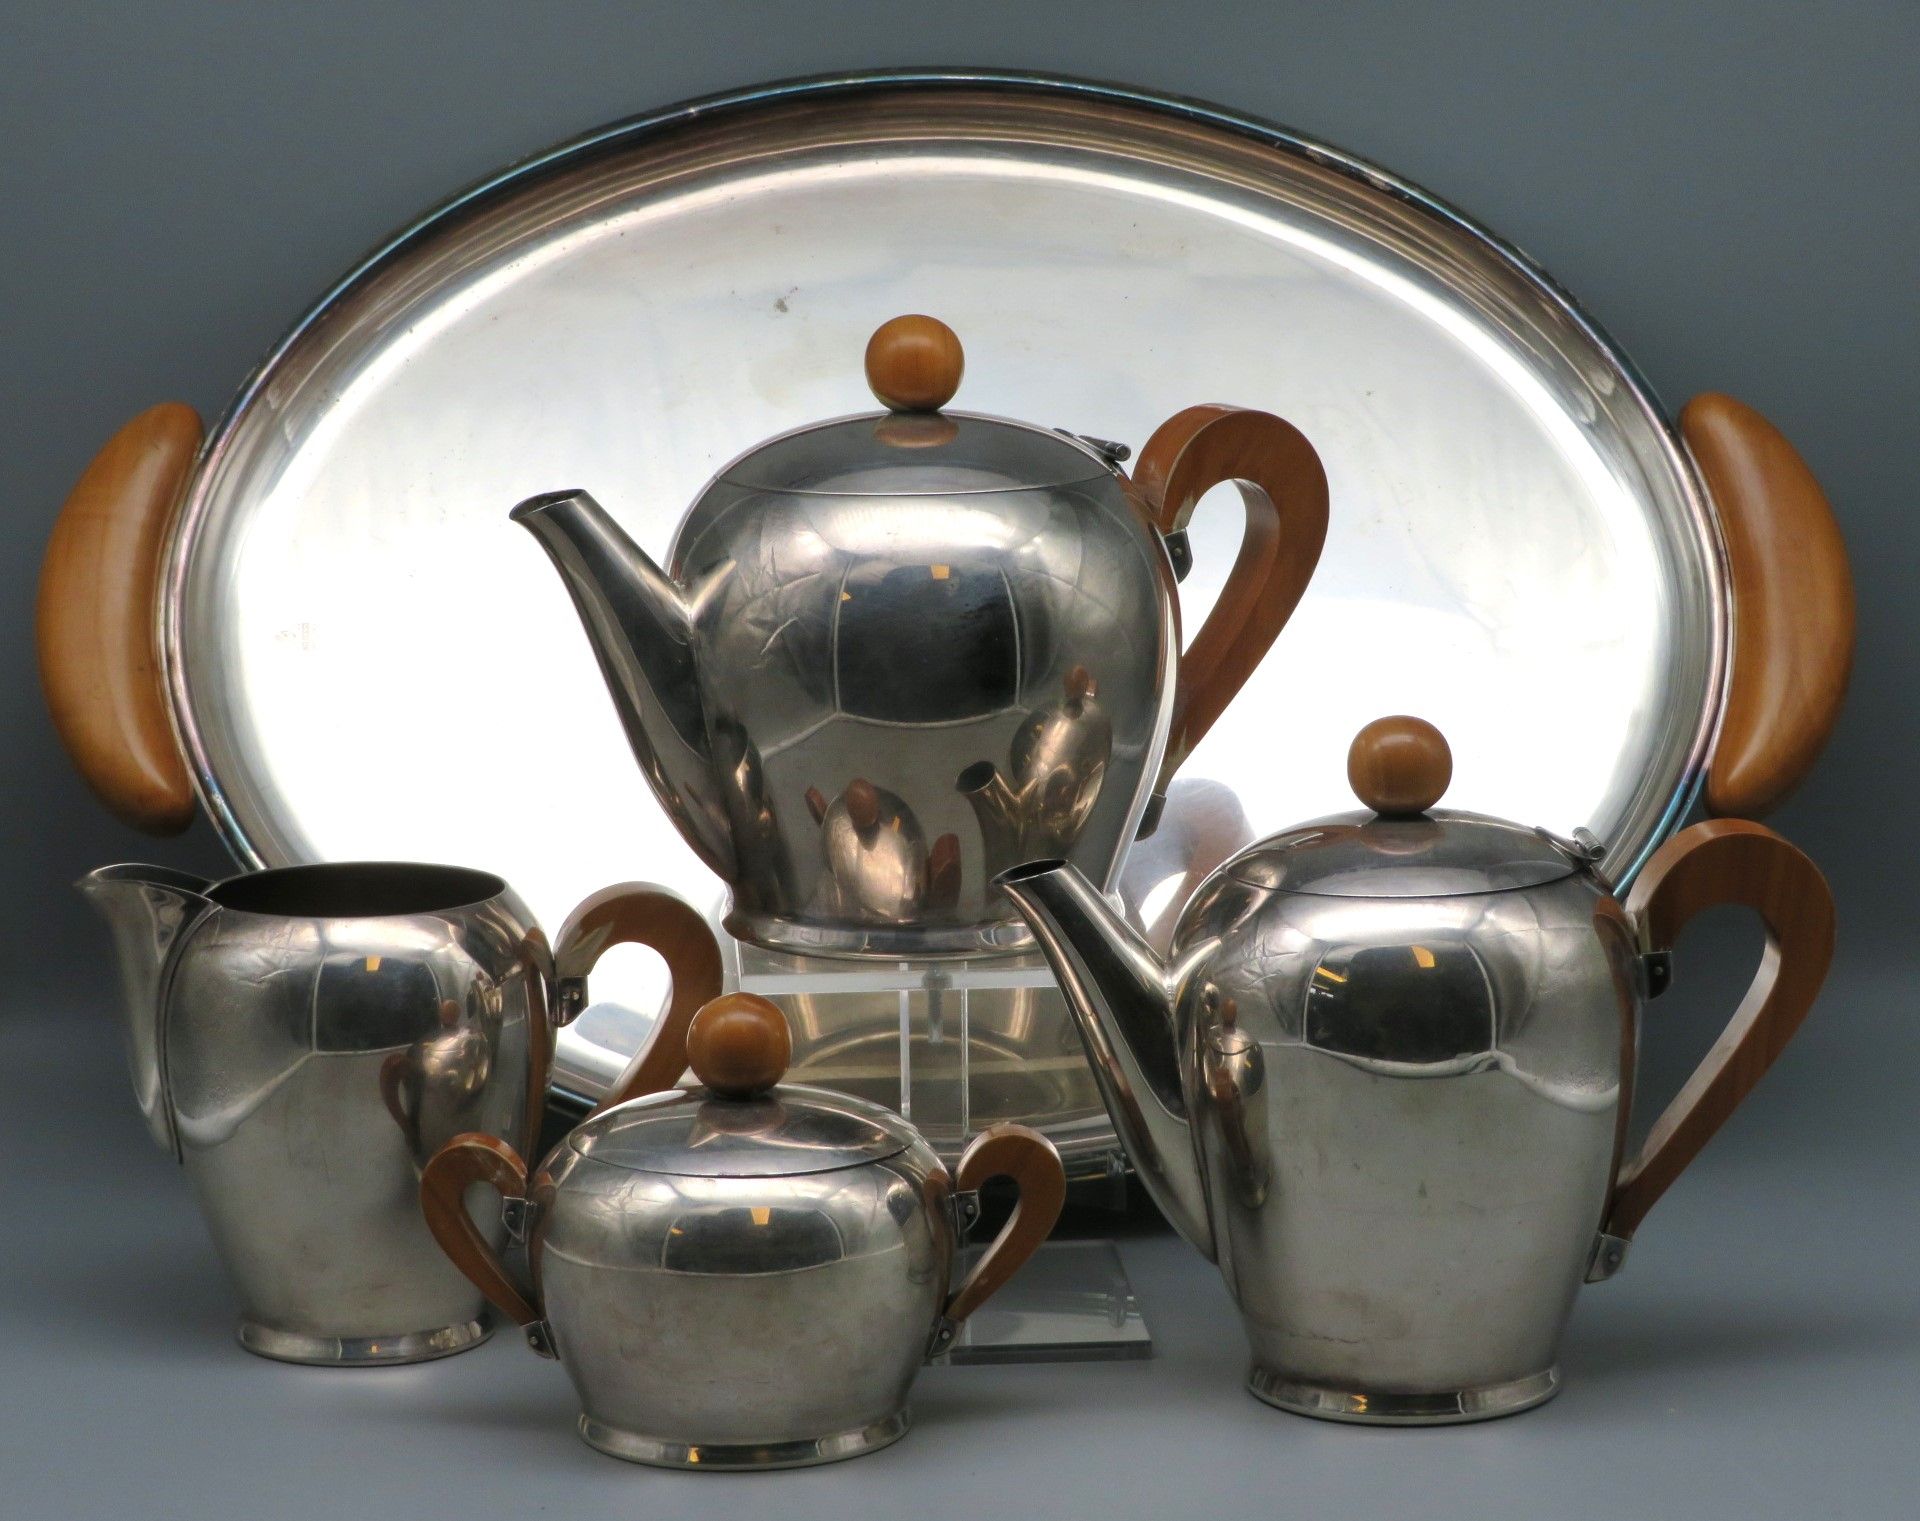 Designer Kaffee- und Teeservice, Bombé, Entwurf Carlo Alessi (1916 - 2009) 1945, 4 teiliges Kaffee-